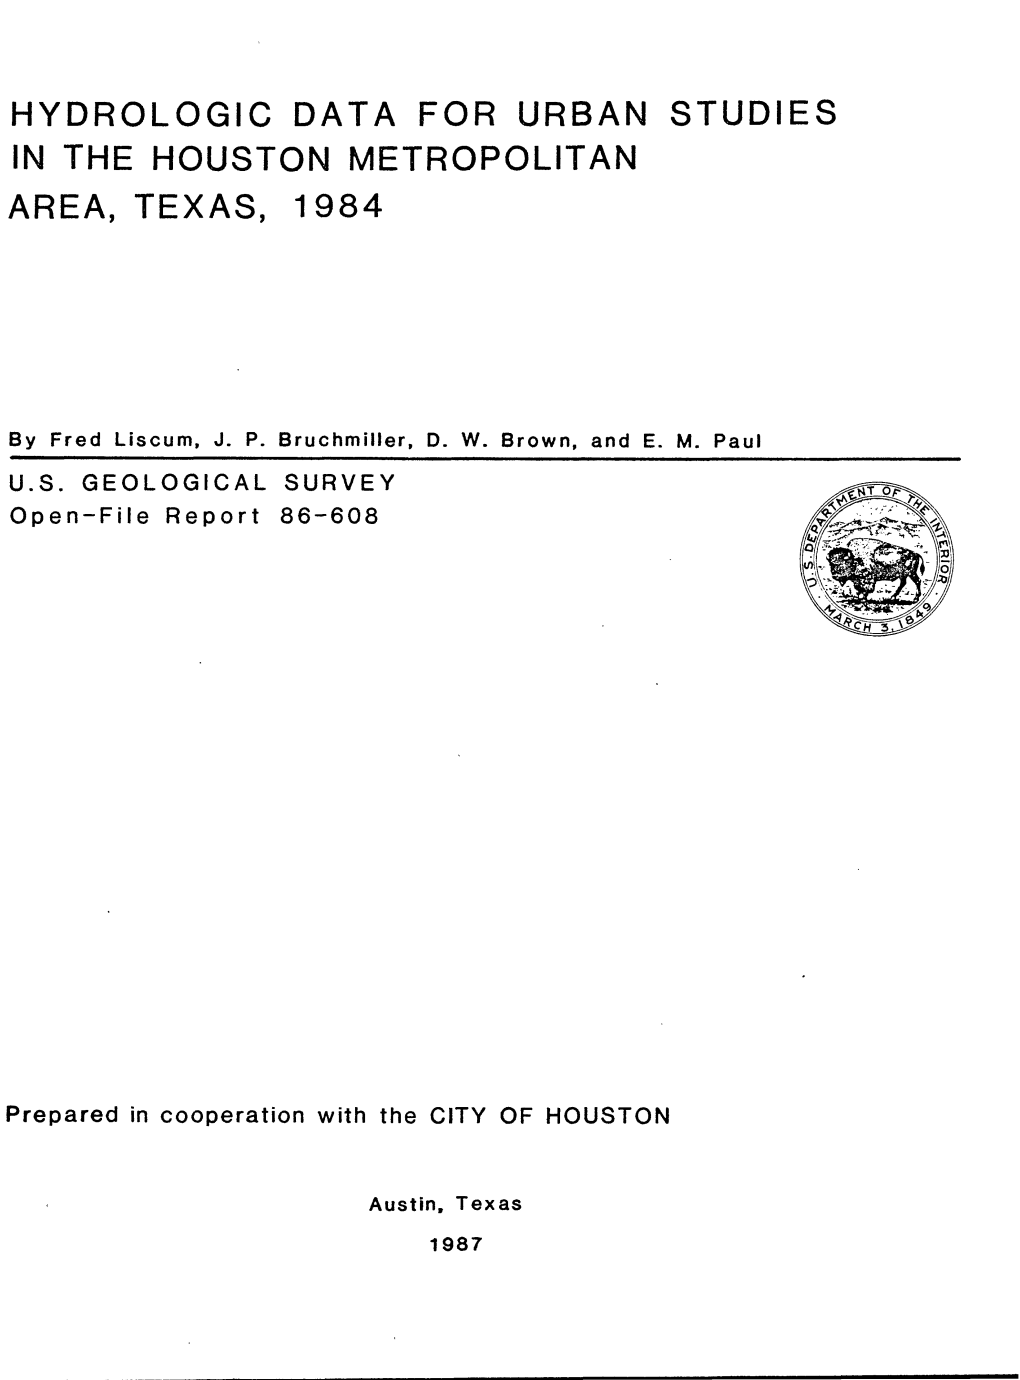 Hydrologic Data for Urban Studies in the Houston Metropolitan Area, Texas, 1984